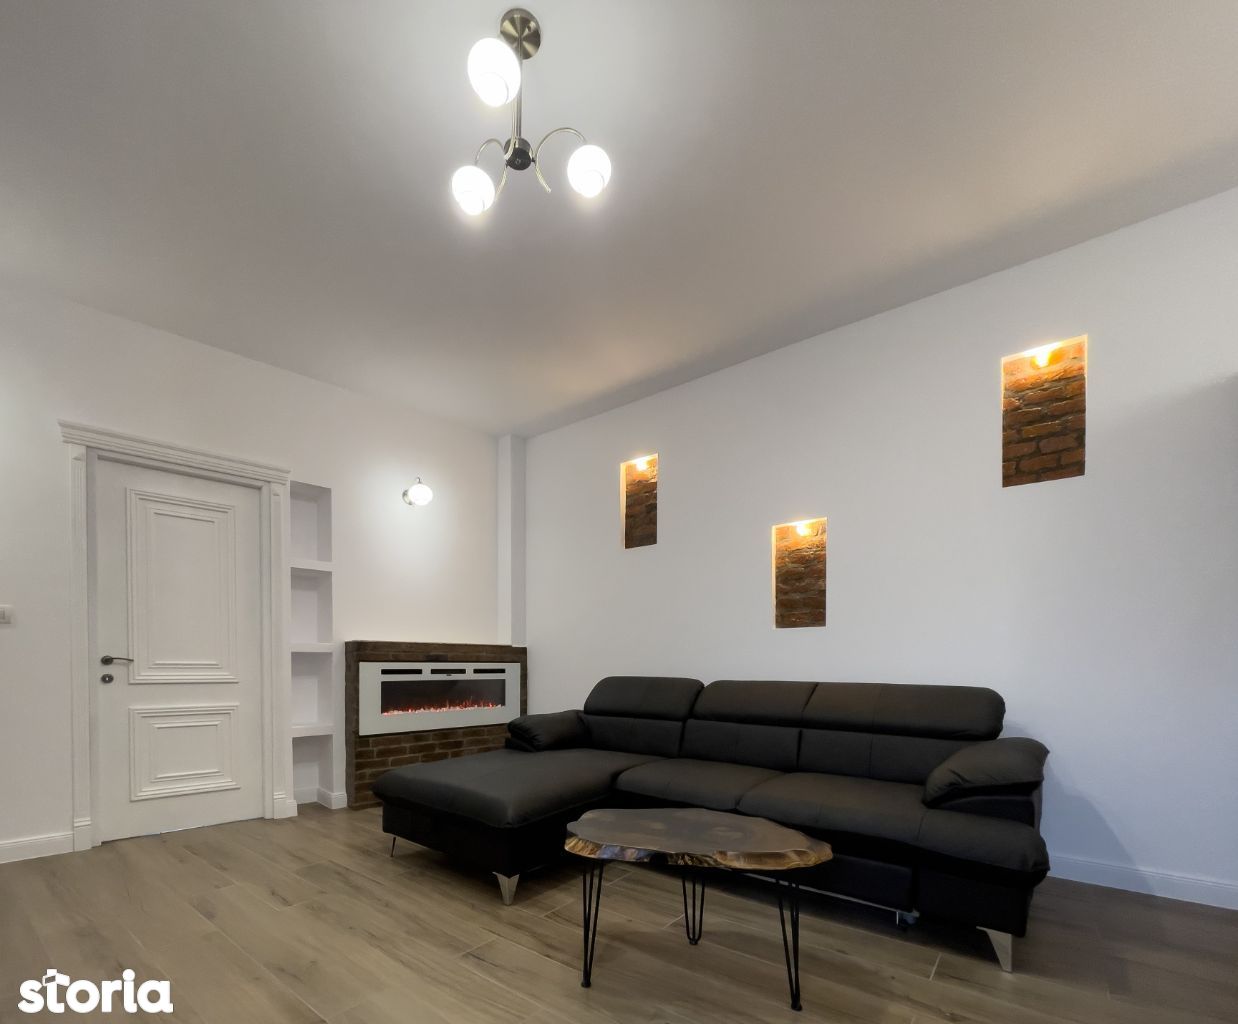 SC VIMAK vinde apartament premium in casa zona Brasovul Vechi